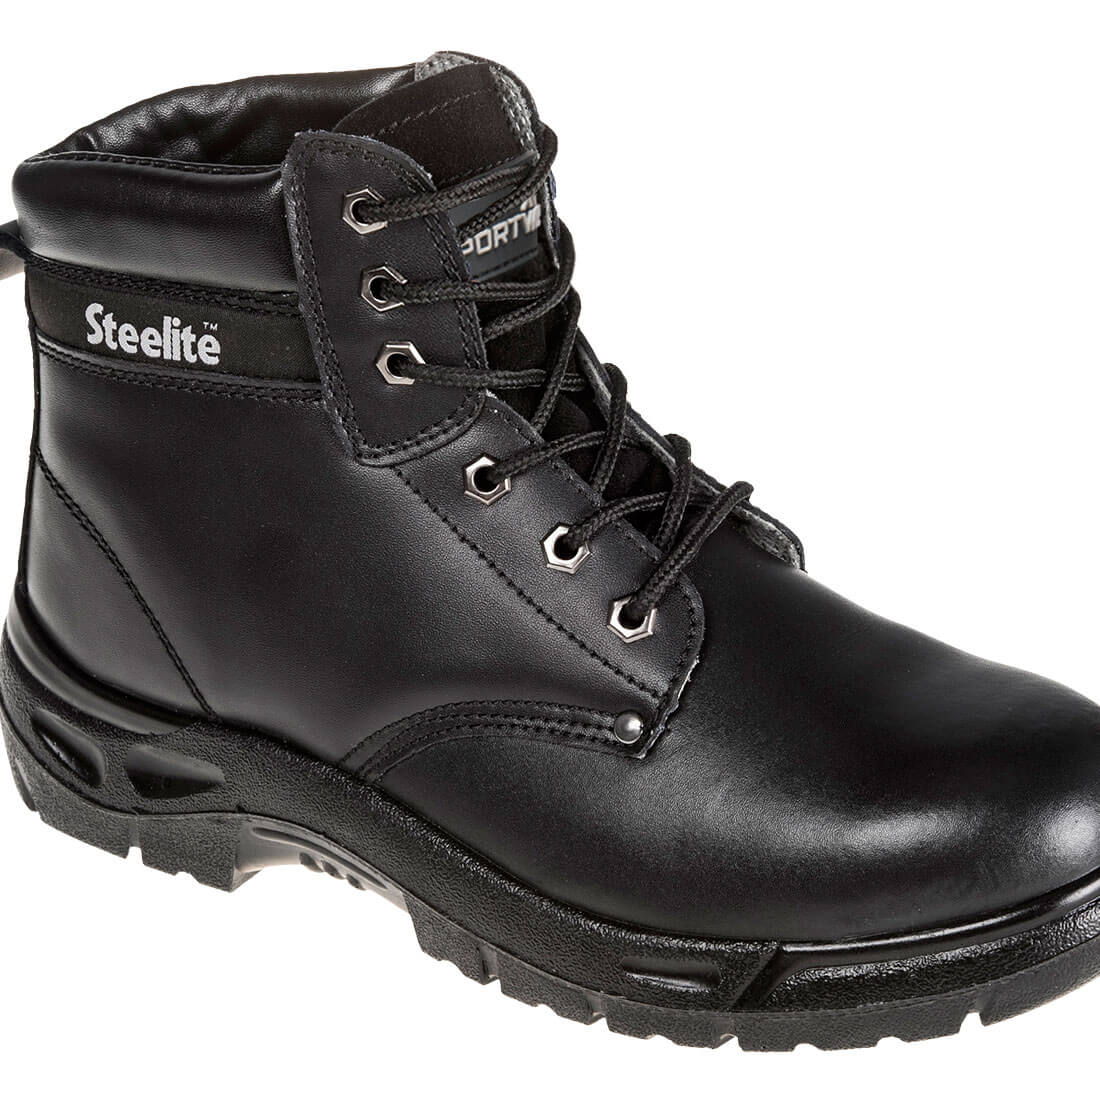 Steelite Boot S3